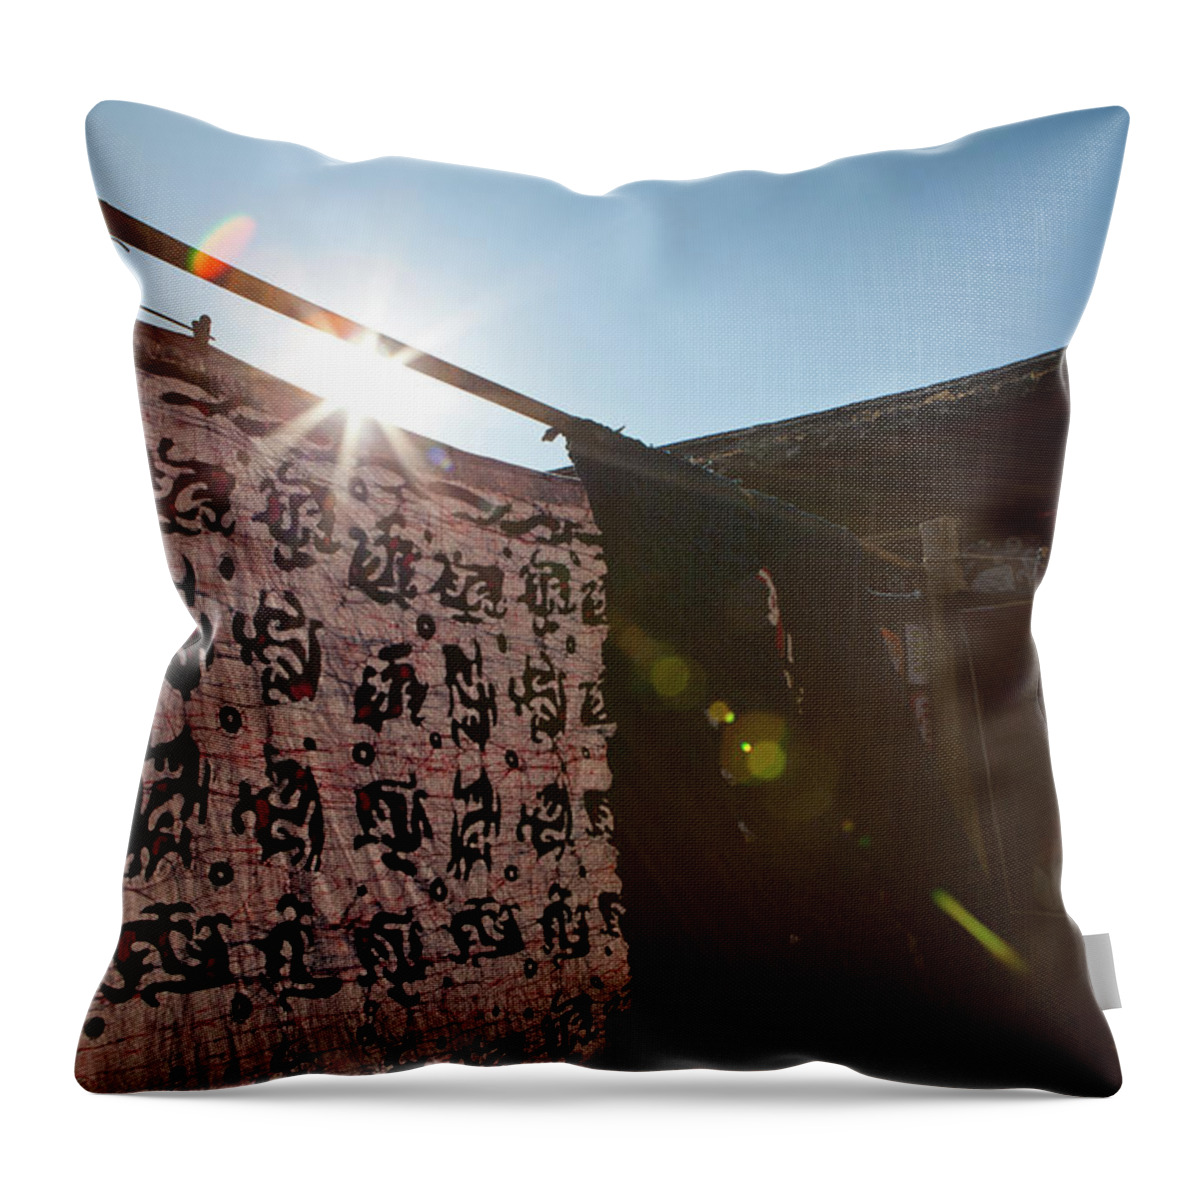 Chinese Culture Throw Pillow featuring the photograph Lijiang, Yunnan, China by Siyi Qian